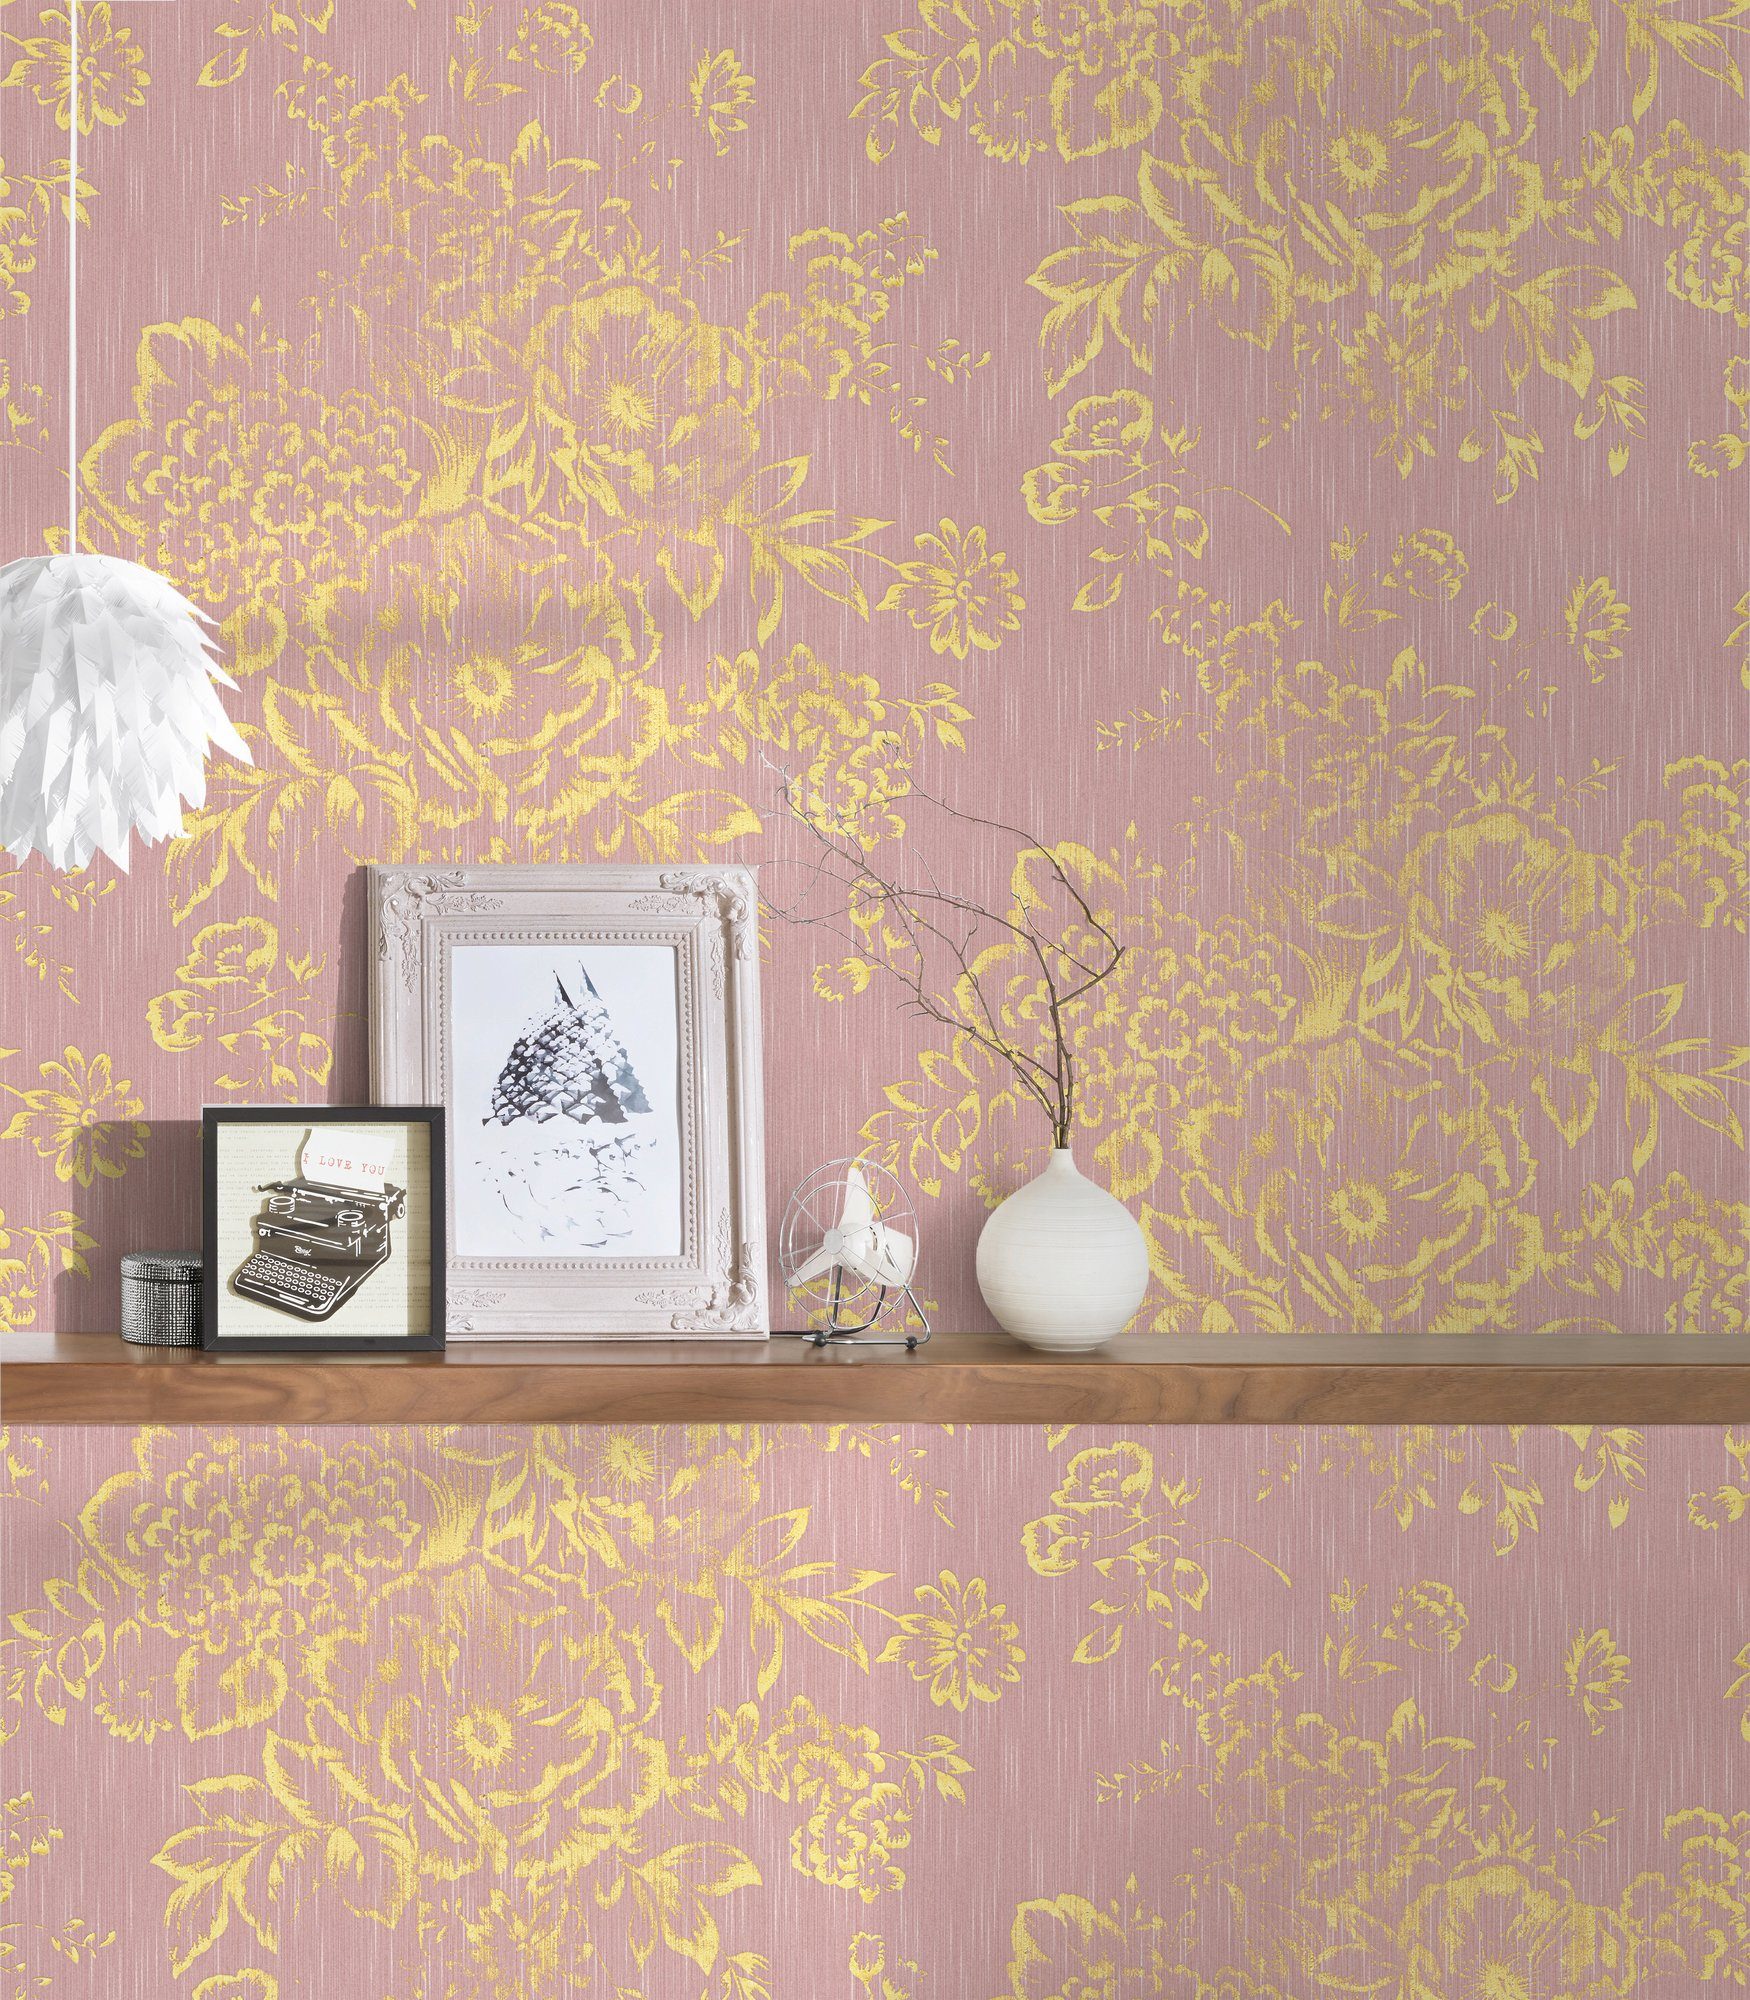 Création Blumen gold/rosa Paper samtig, Textiltapete Barocktapete A.S. matt, glänzend, Tapete Architects Silk, Metallic floral,